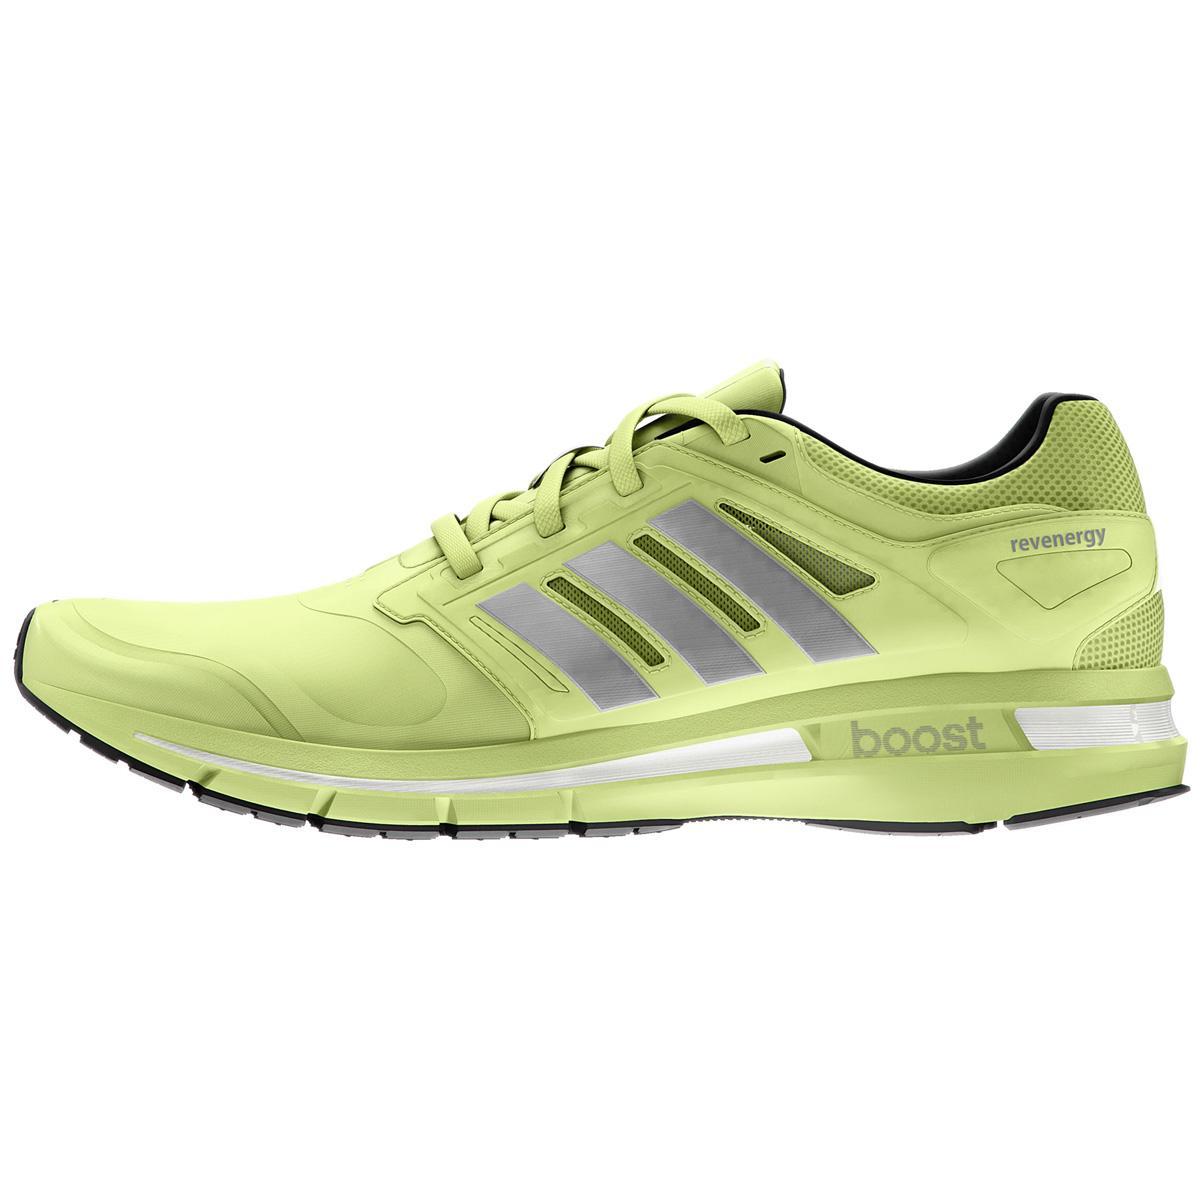 Adidas Womens Revenergy Boost Running Shoes - Glow/Metallic Silver ...